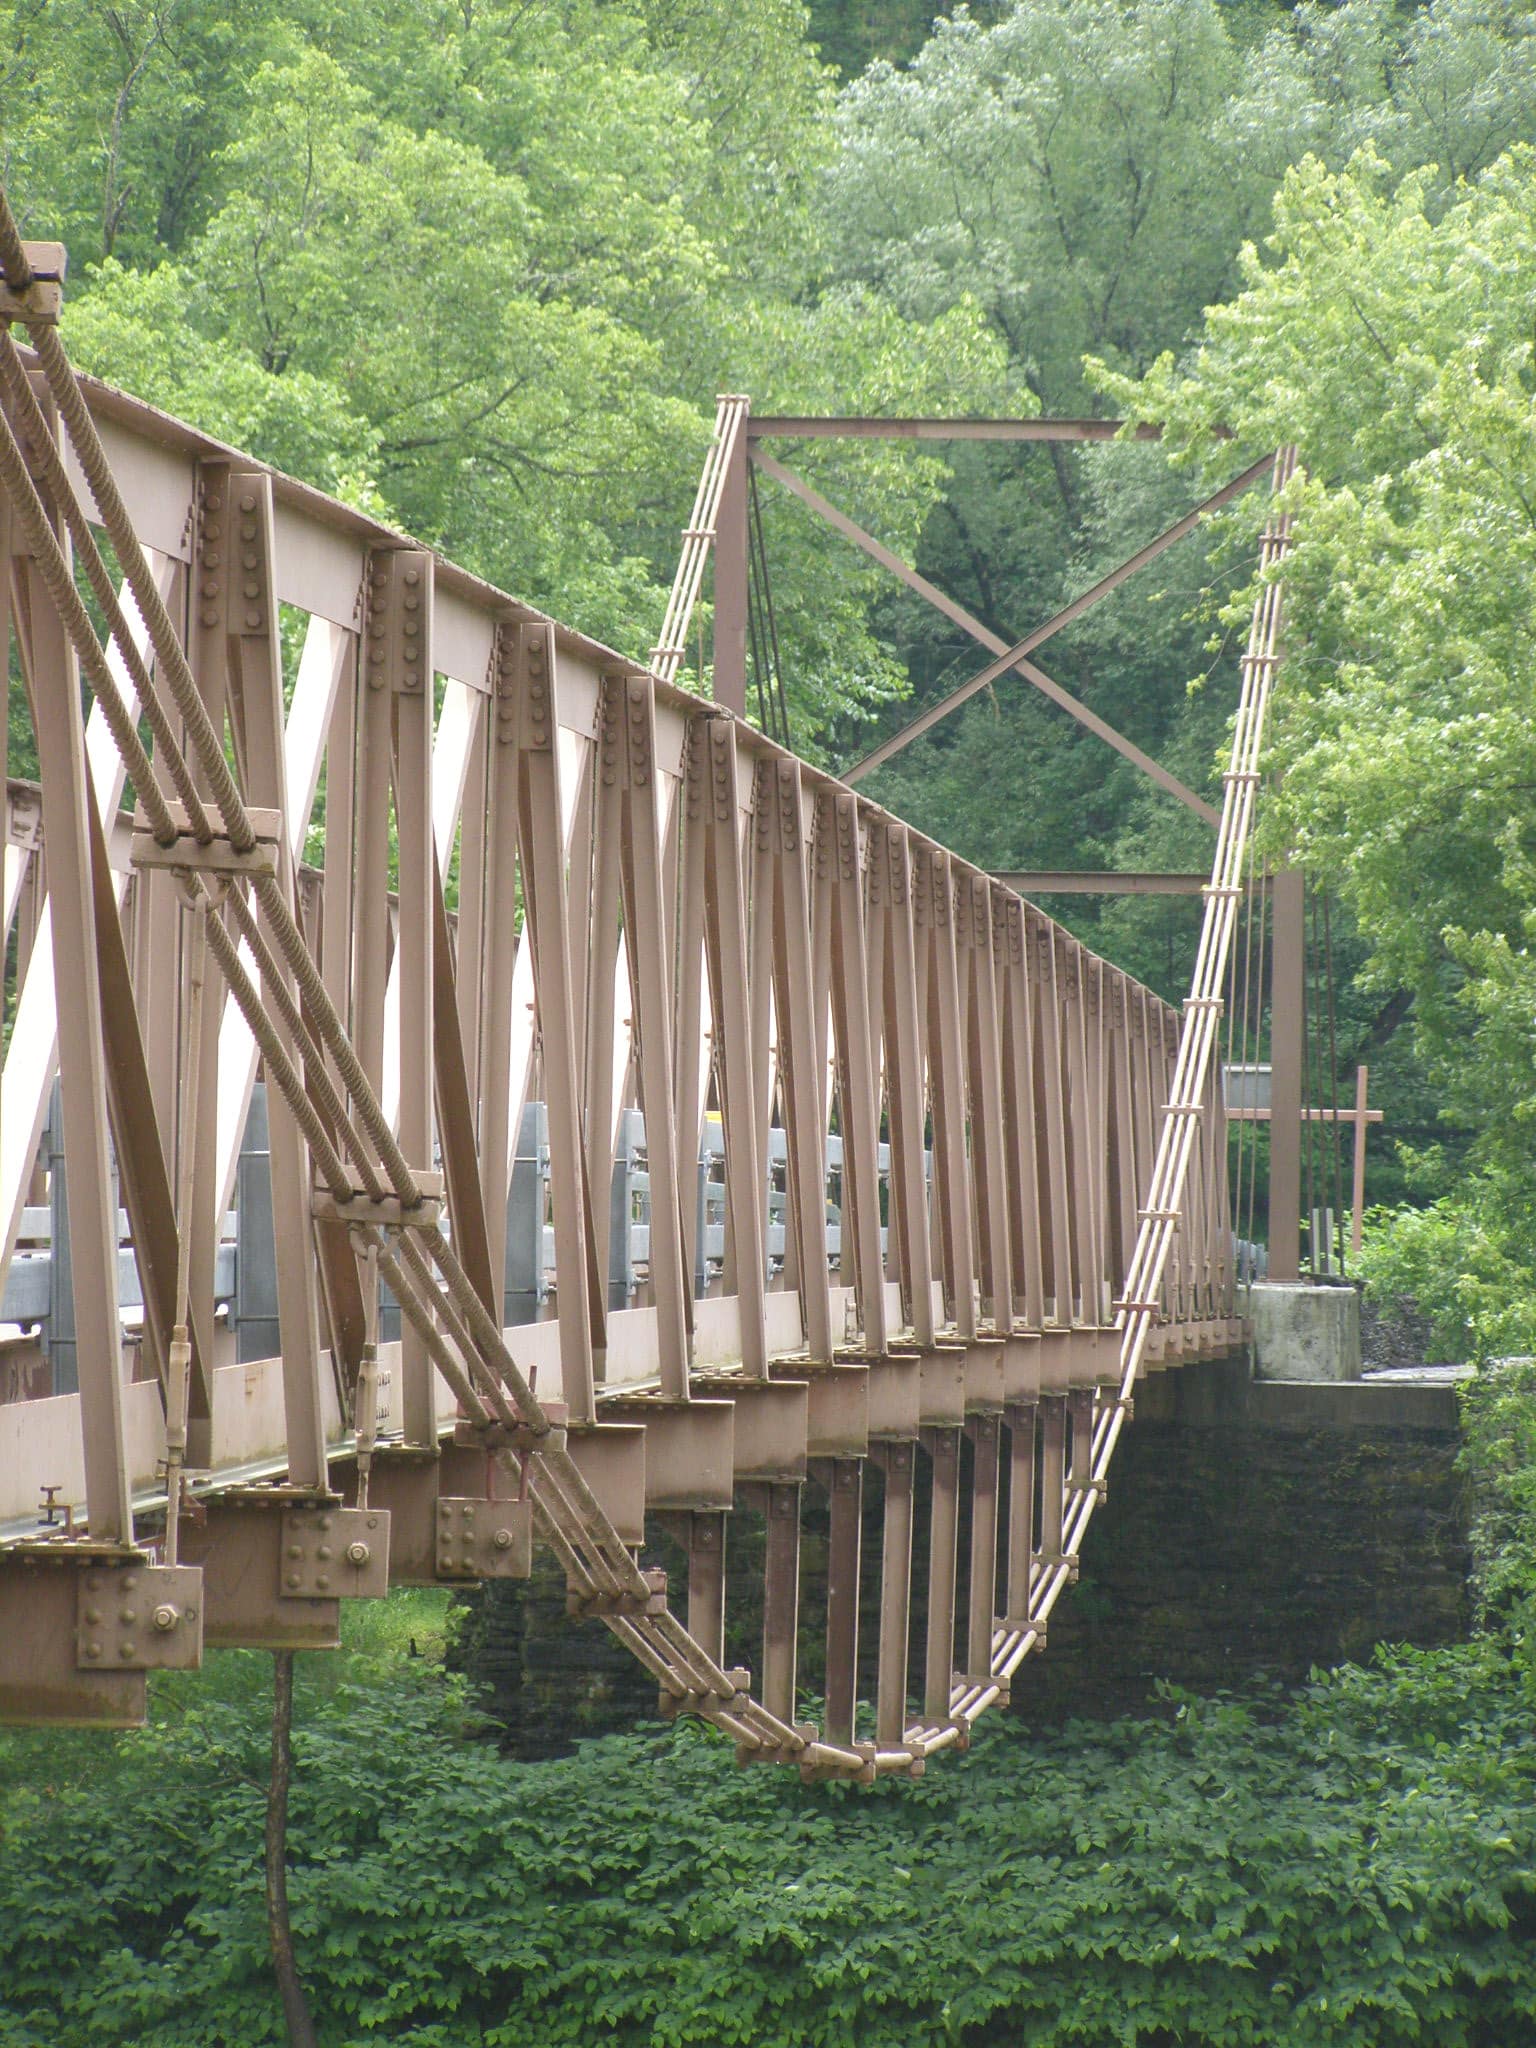 Under-Spanned Suspension Bridges